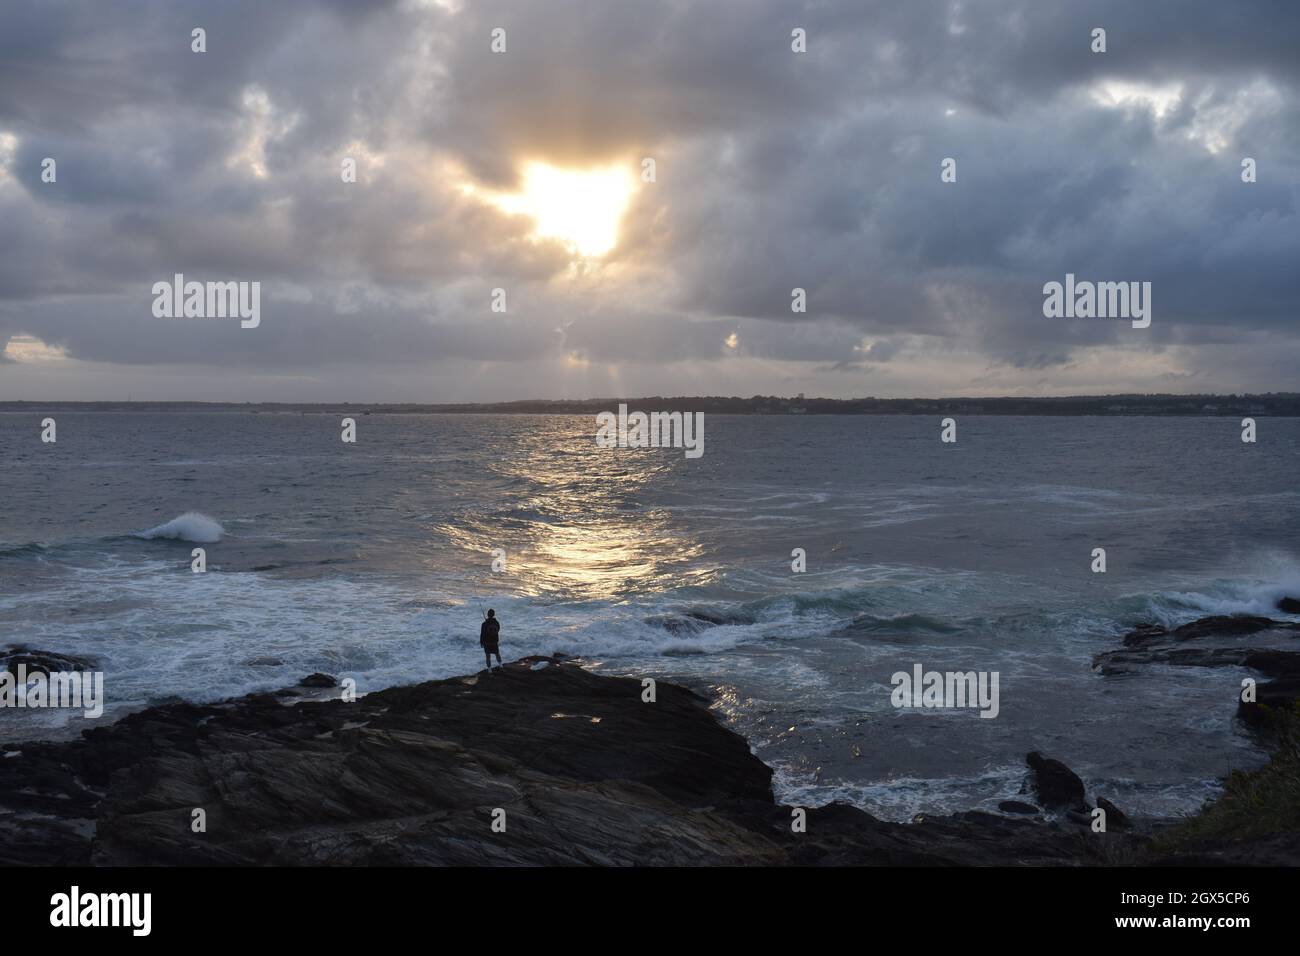 Fishermen fishing on rocky shore in Jamestown, Rhode Island as waves crash into shore -02 Stock Photo